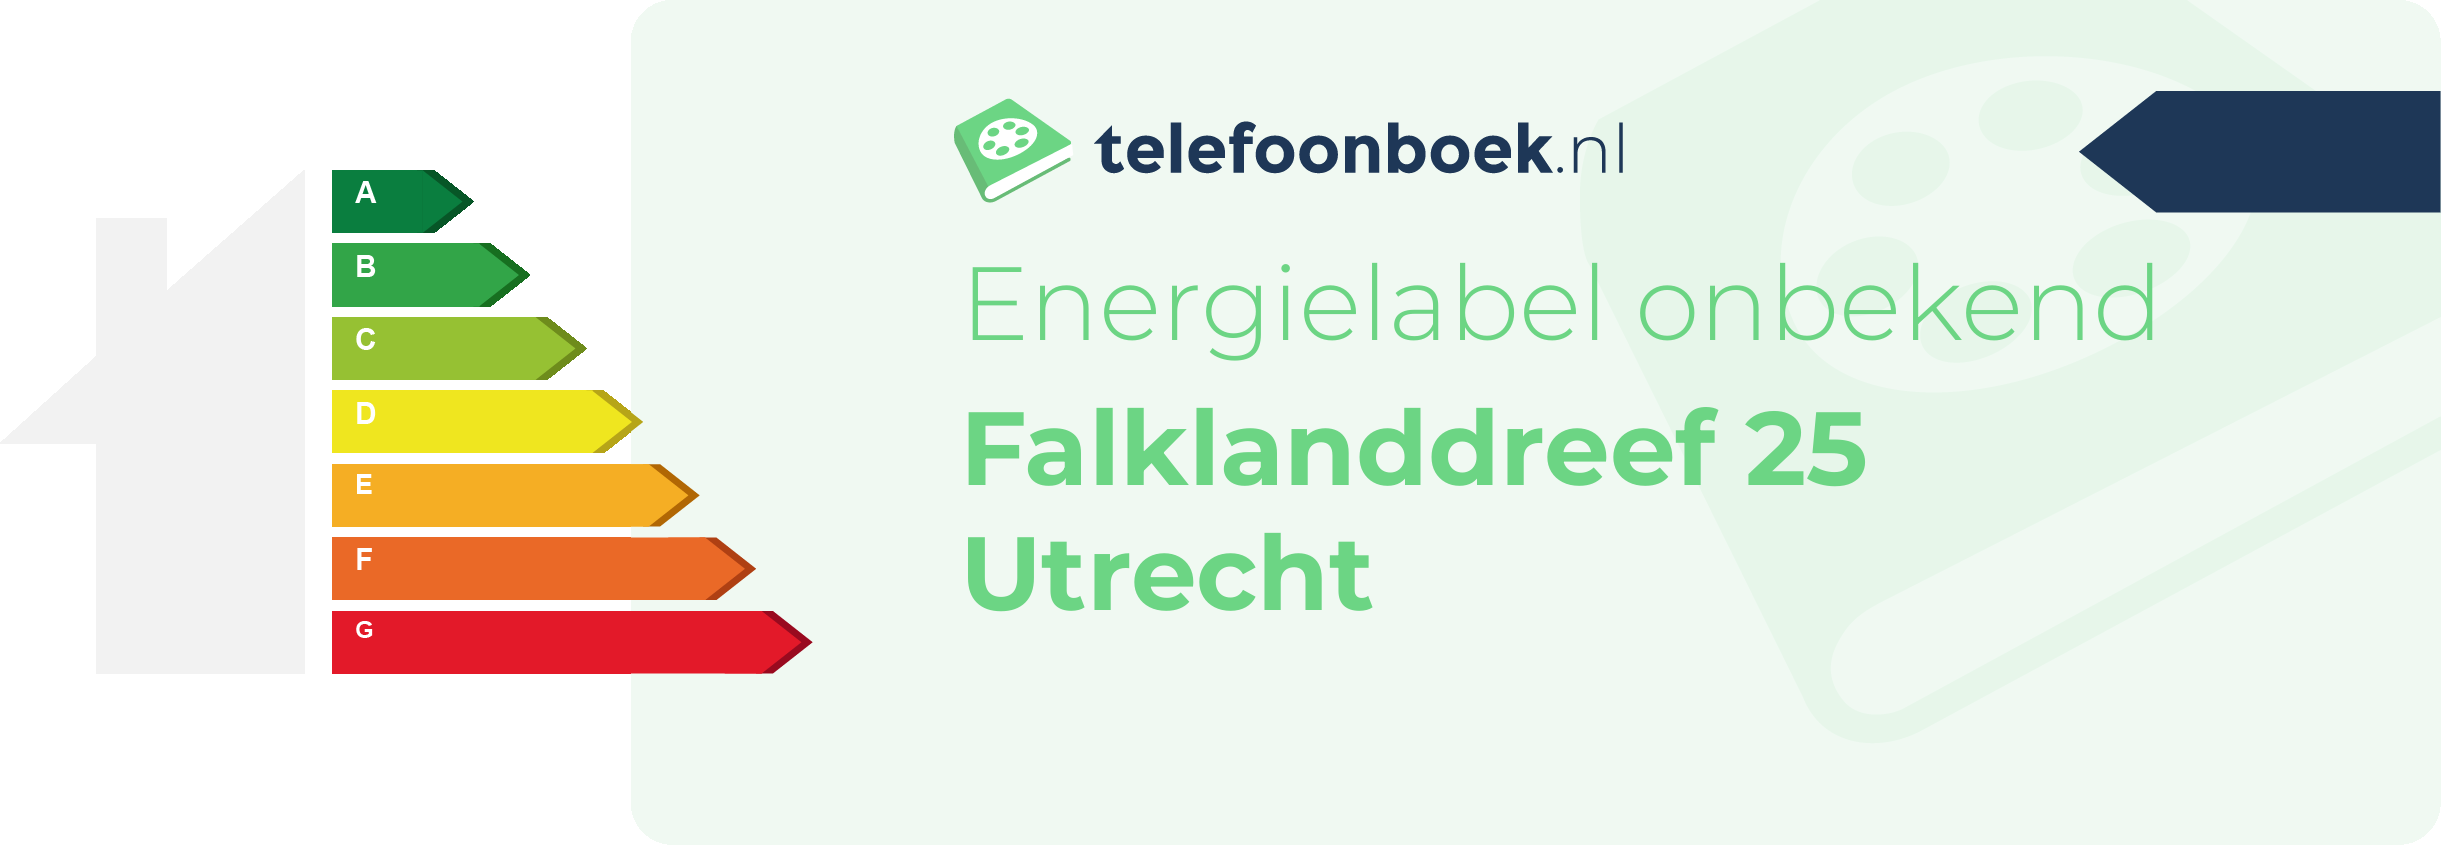 Energielabel Falklanddreef 25 Utrecht